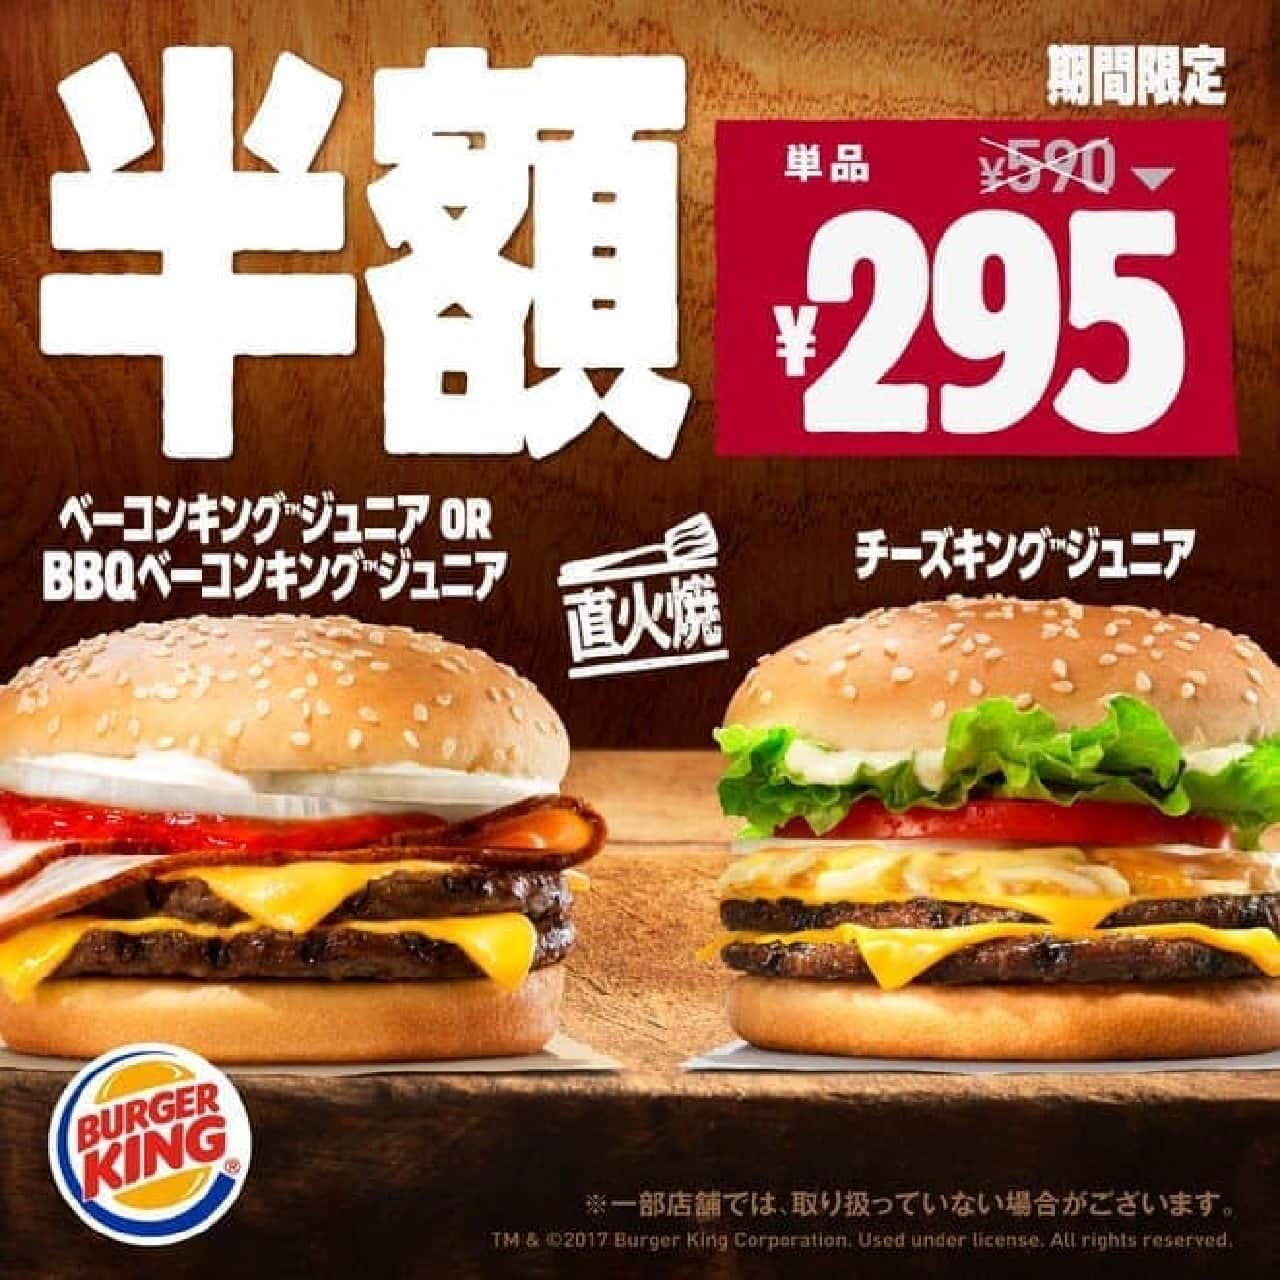 Burger King Half Price Campaign